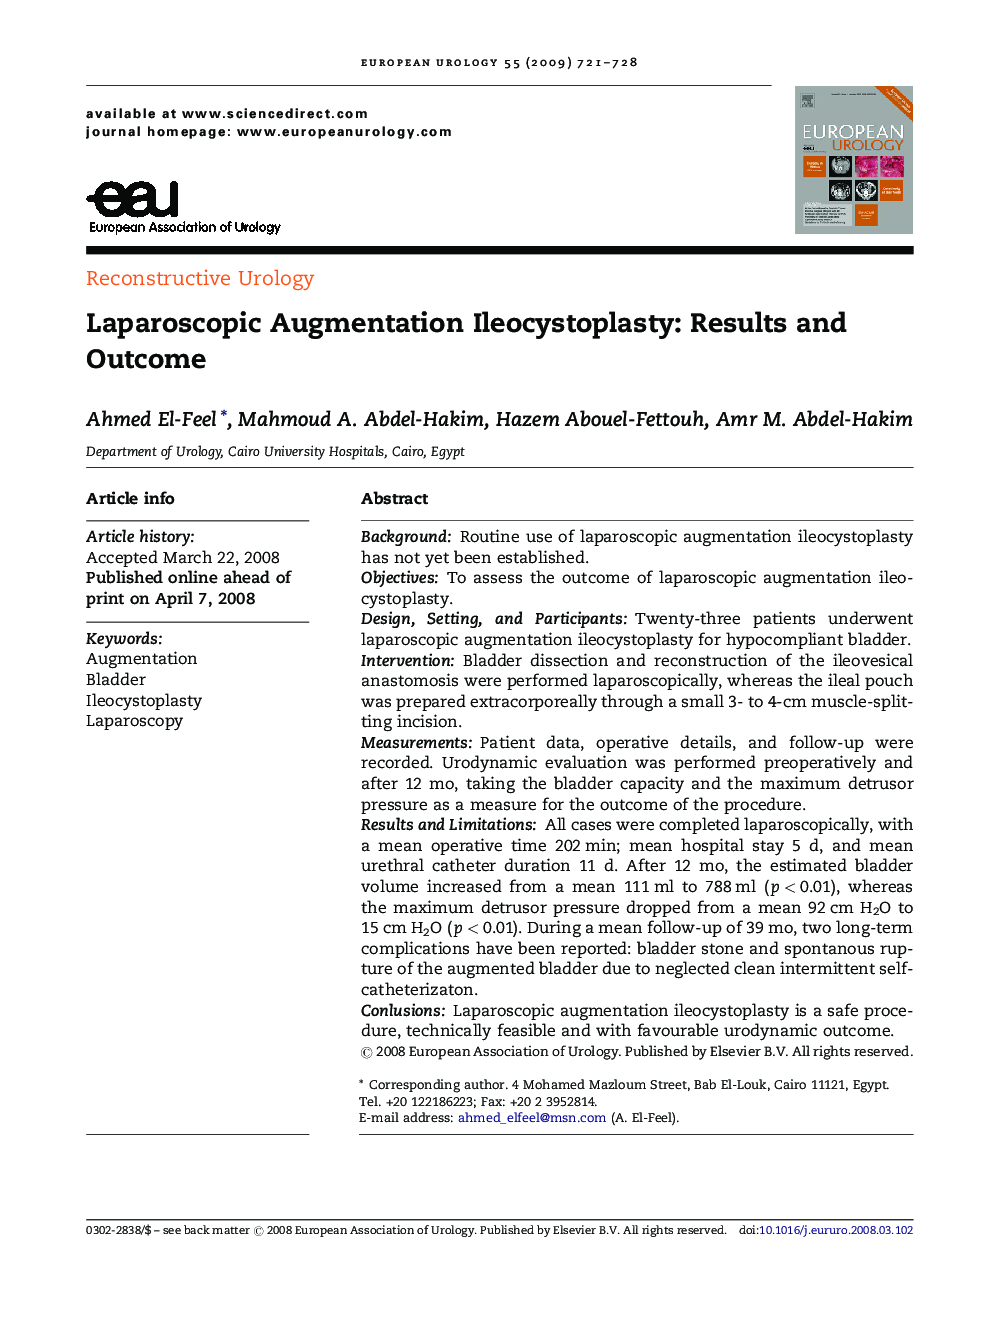 Laparoscopic Augmentation Ileocystoplasty: Results and Outcome